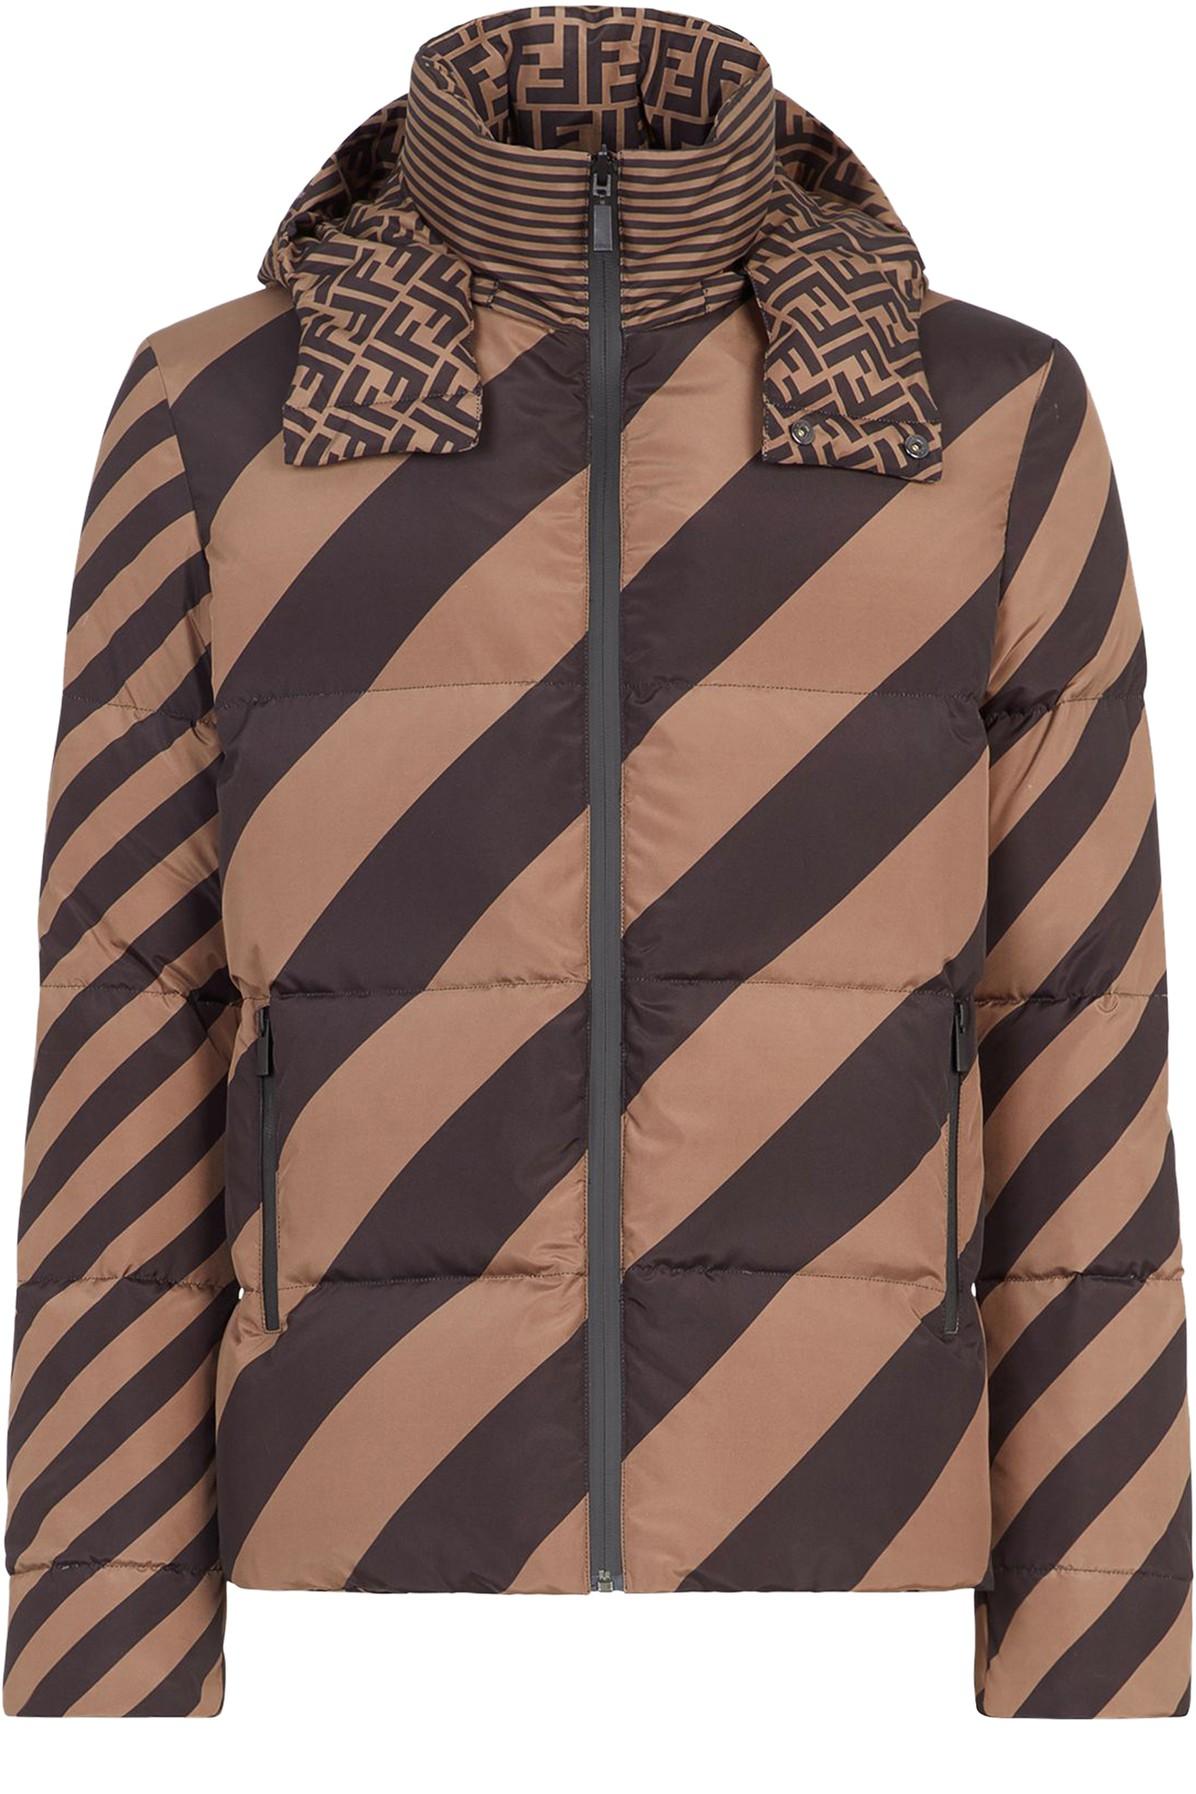 Fendi Synthetic Brown Nylon Down Jacket for Men - Lyst